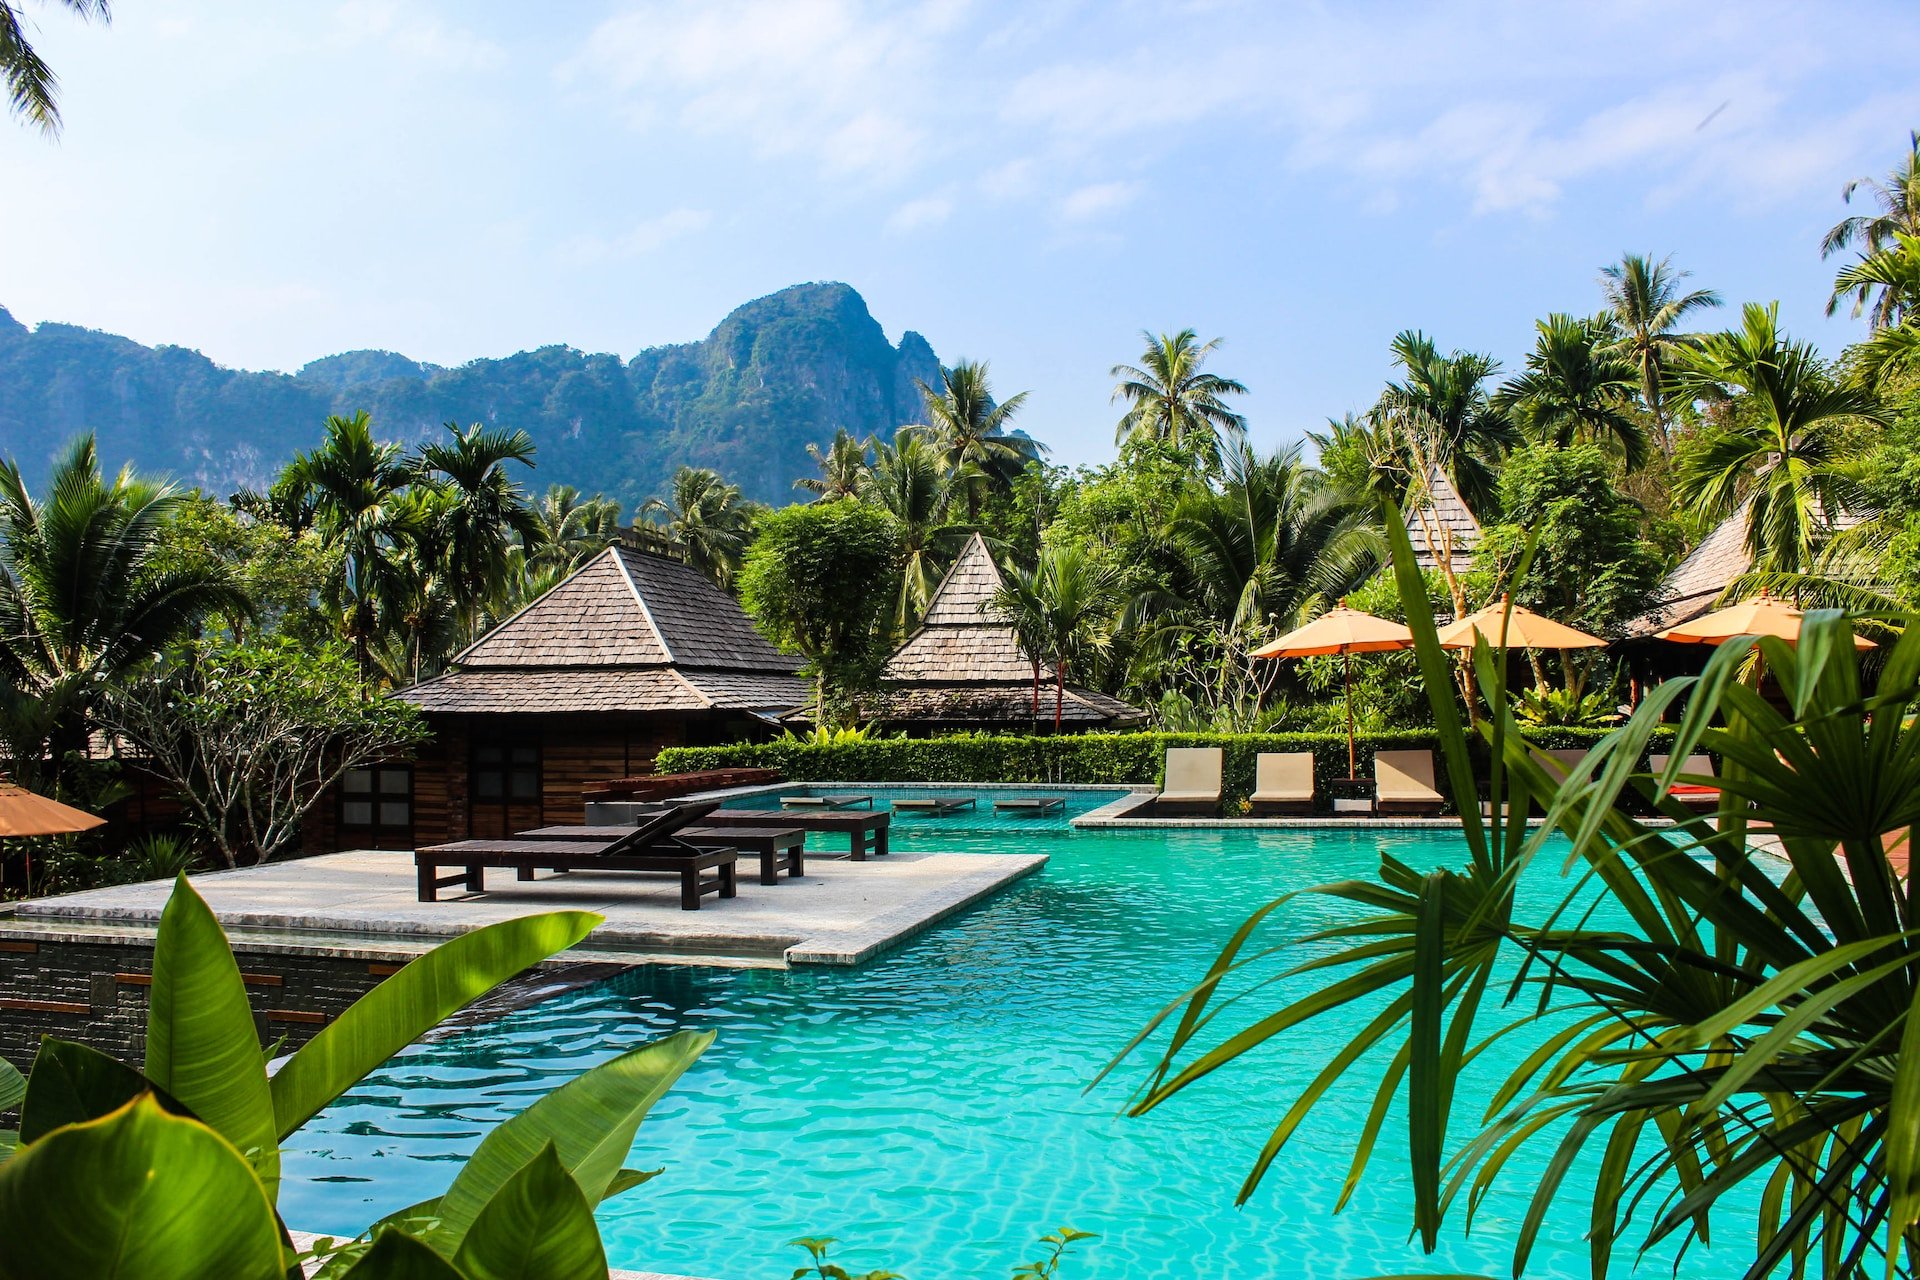 Where to stay in Krabi, Thailand - Best Krabi Hotels - Best areas to stay in Krabi - Best Budget Krabi Accommodation - Best Krabi Resorts